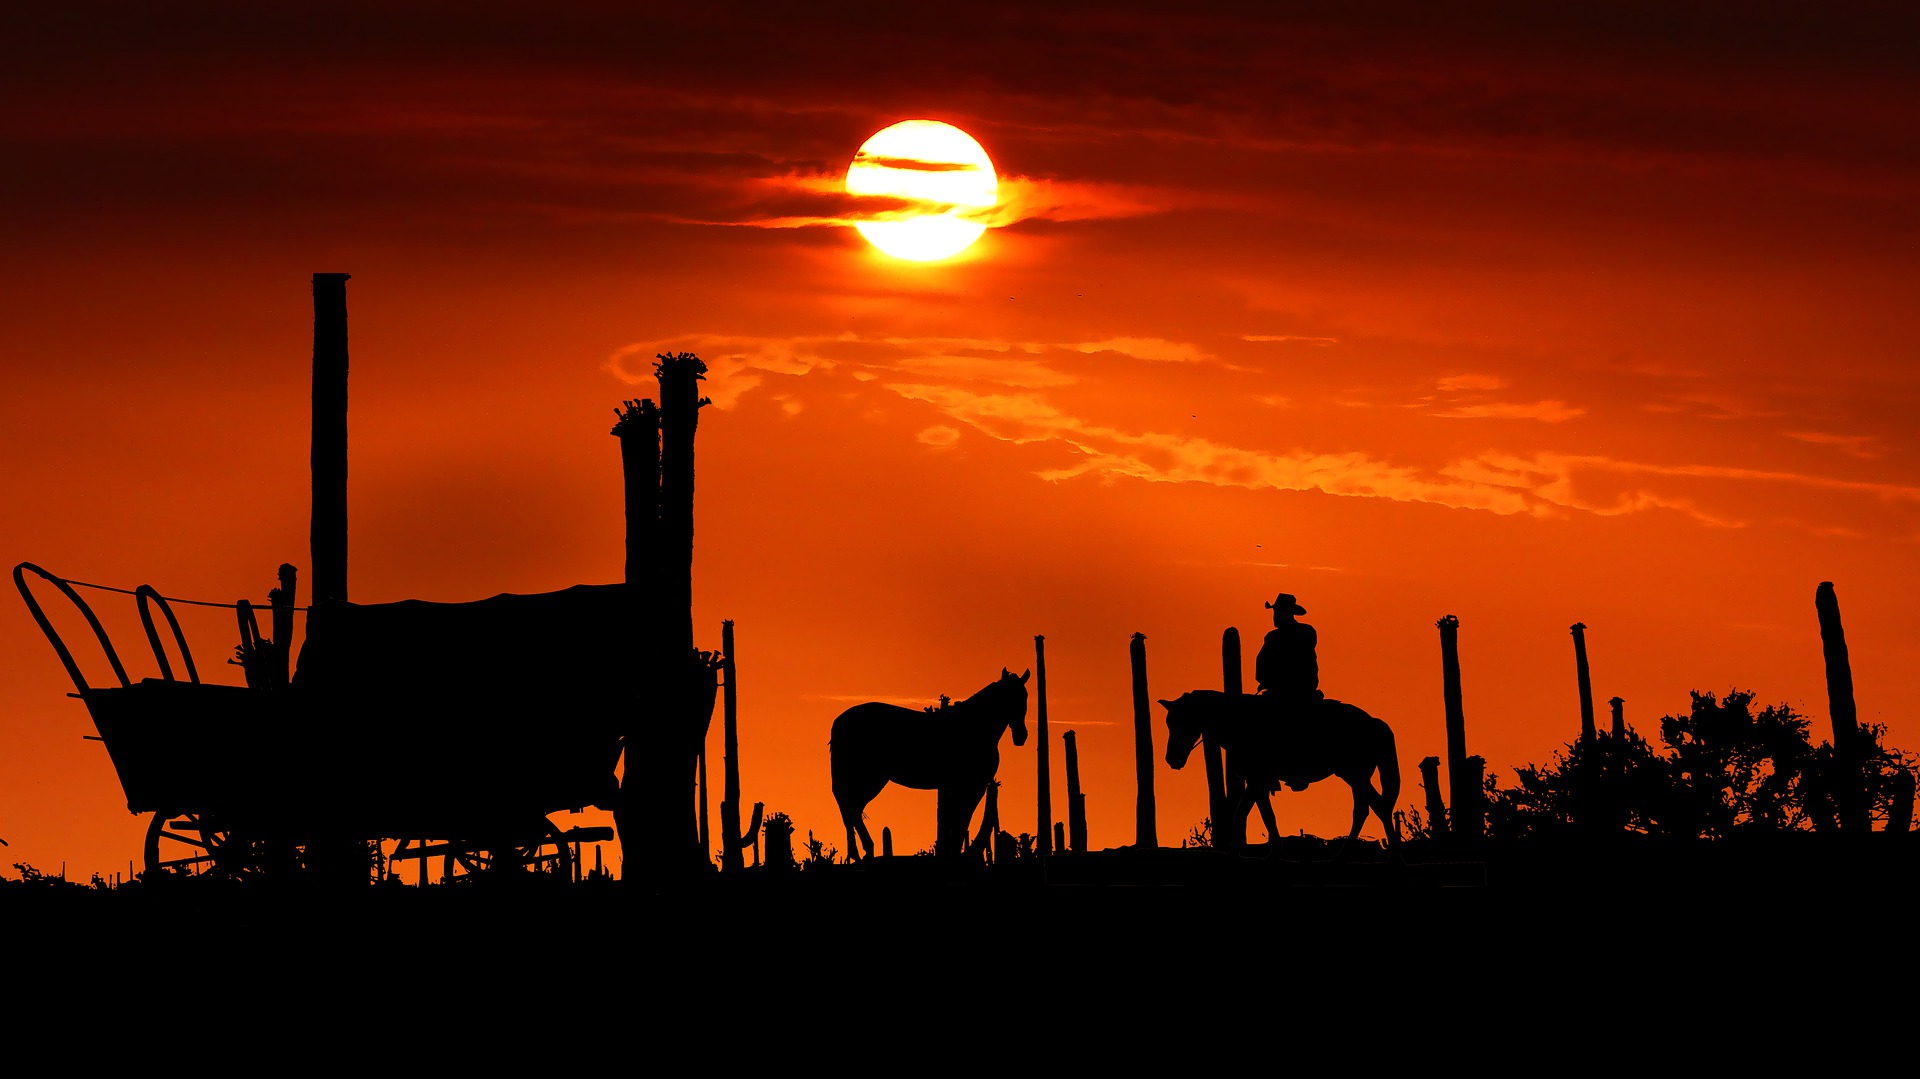 Western sunset western themed website